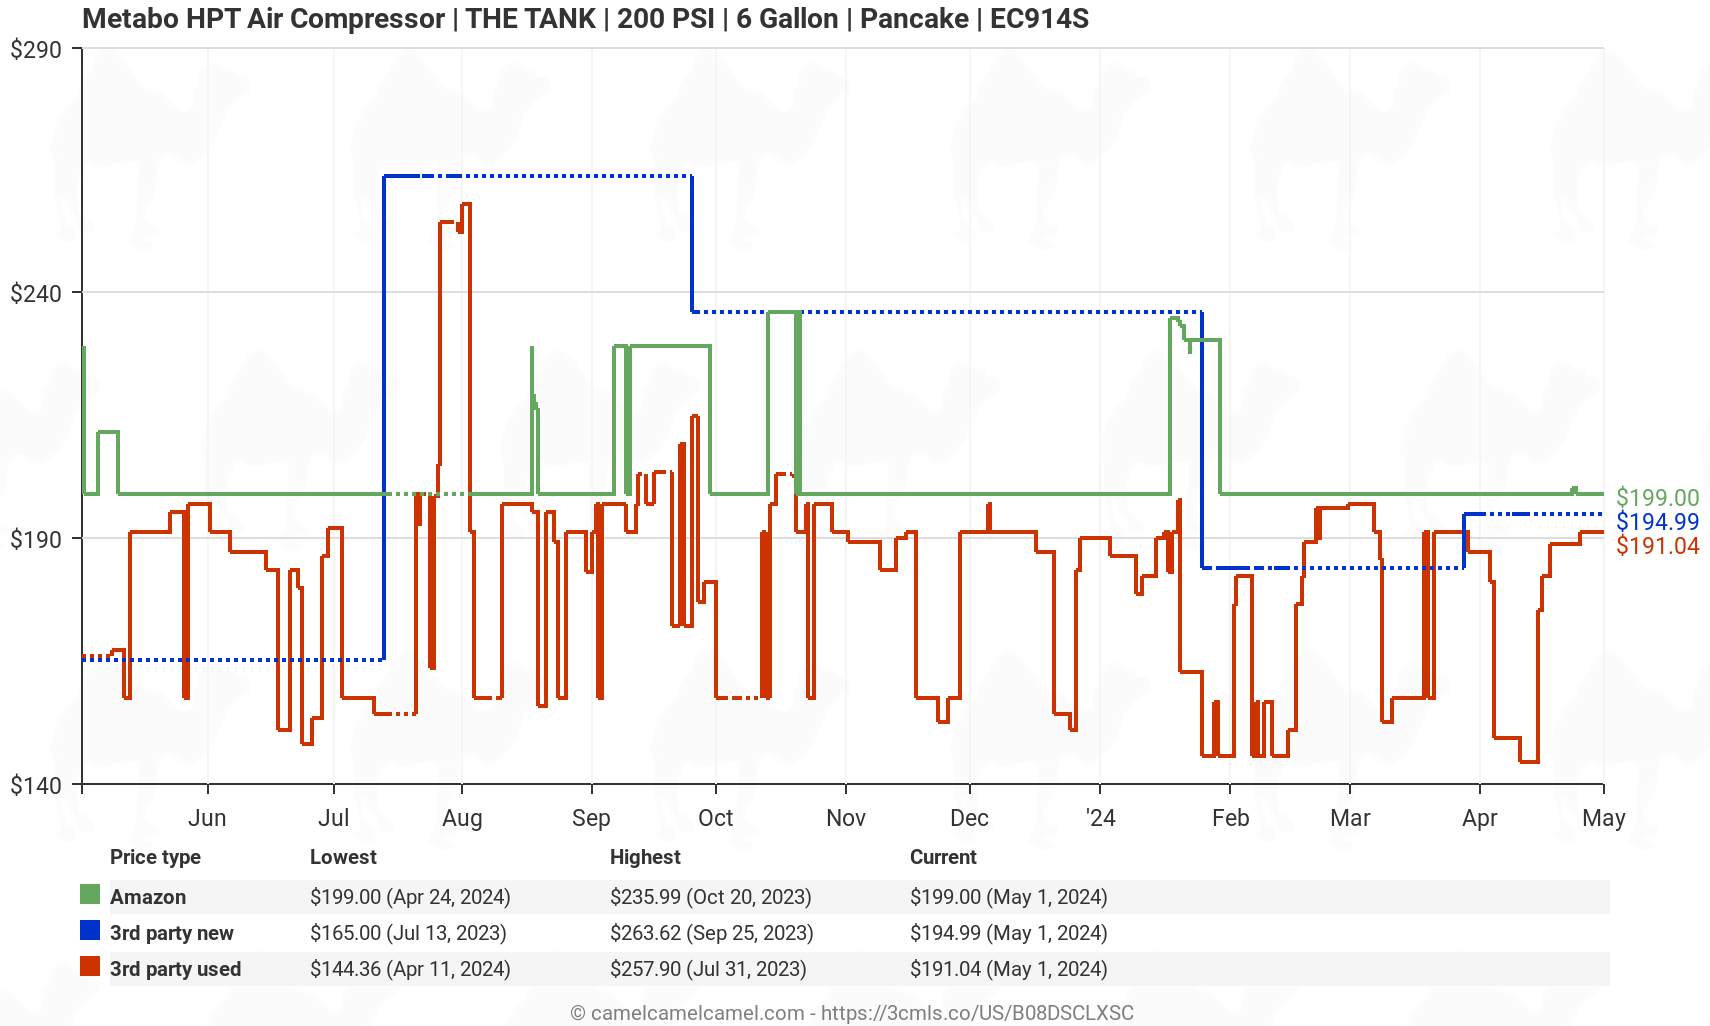 Metabo HPT "THE TANK" Pancake Air Compressor, 200 PSI, 6 Gallon (EC914S) - Price History: B08DSCLXSC